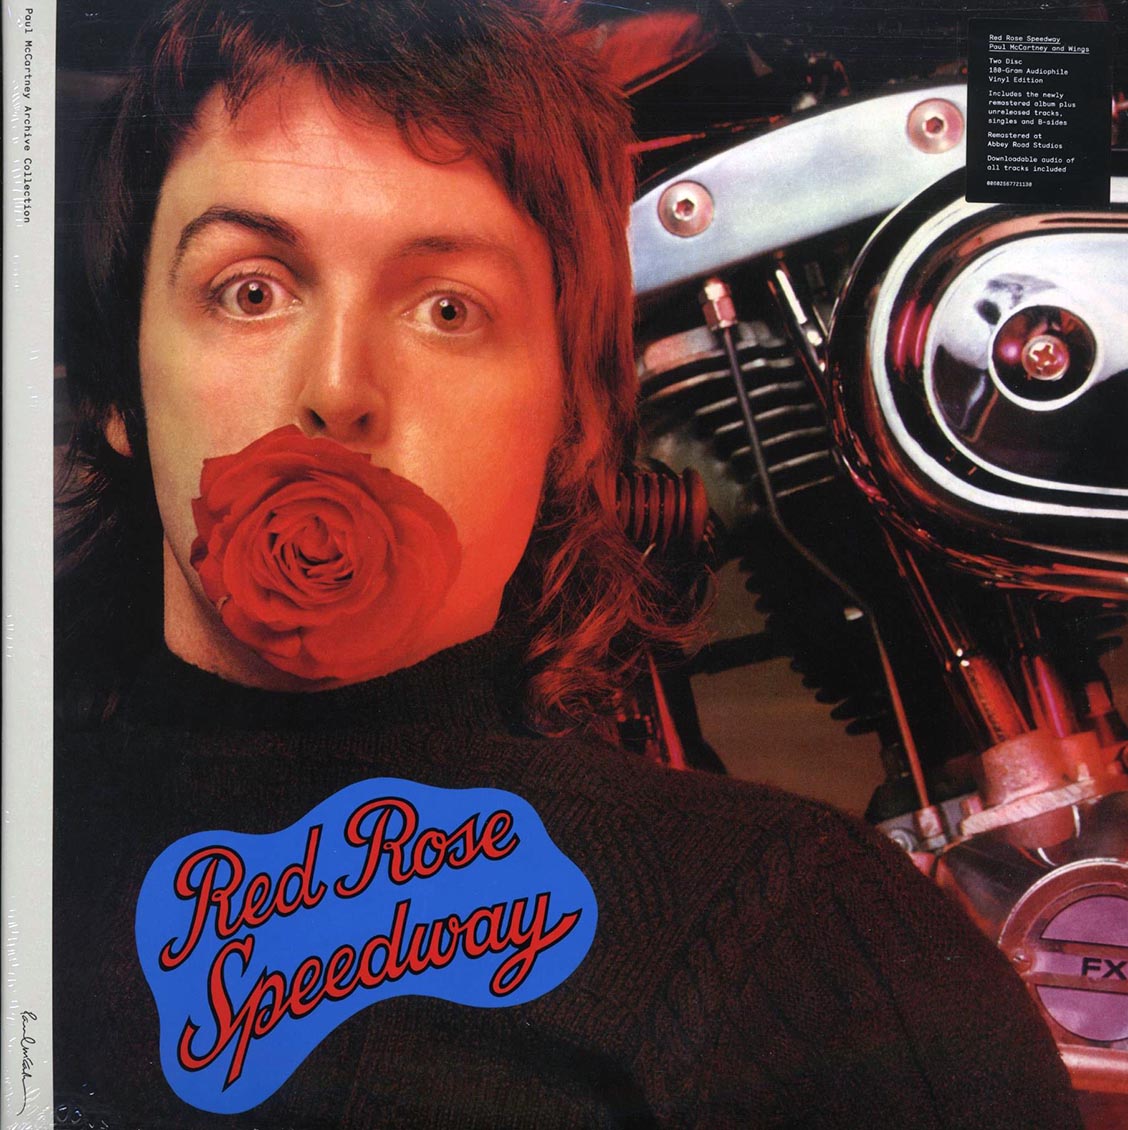 Paul McCartney & Wings - Red Rose Speedway